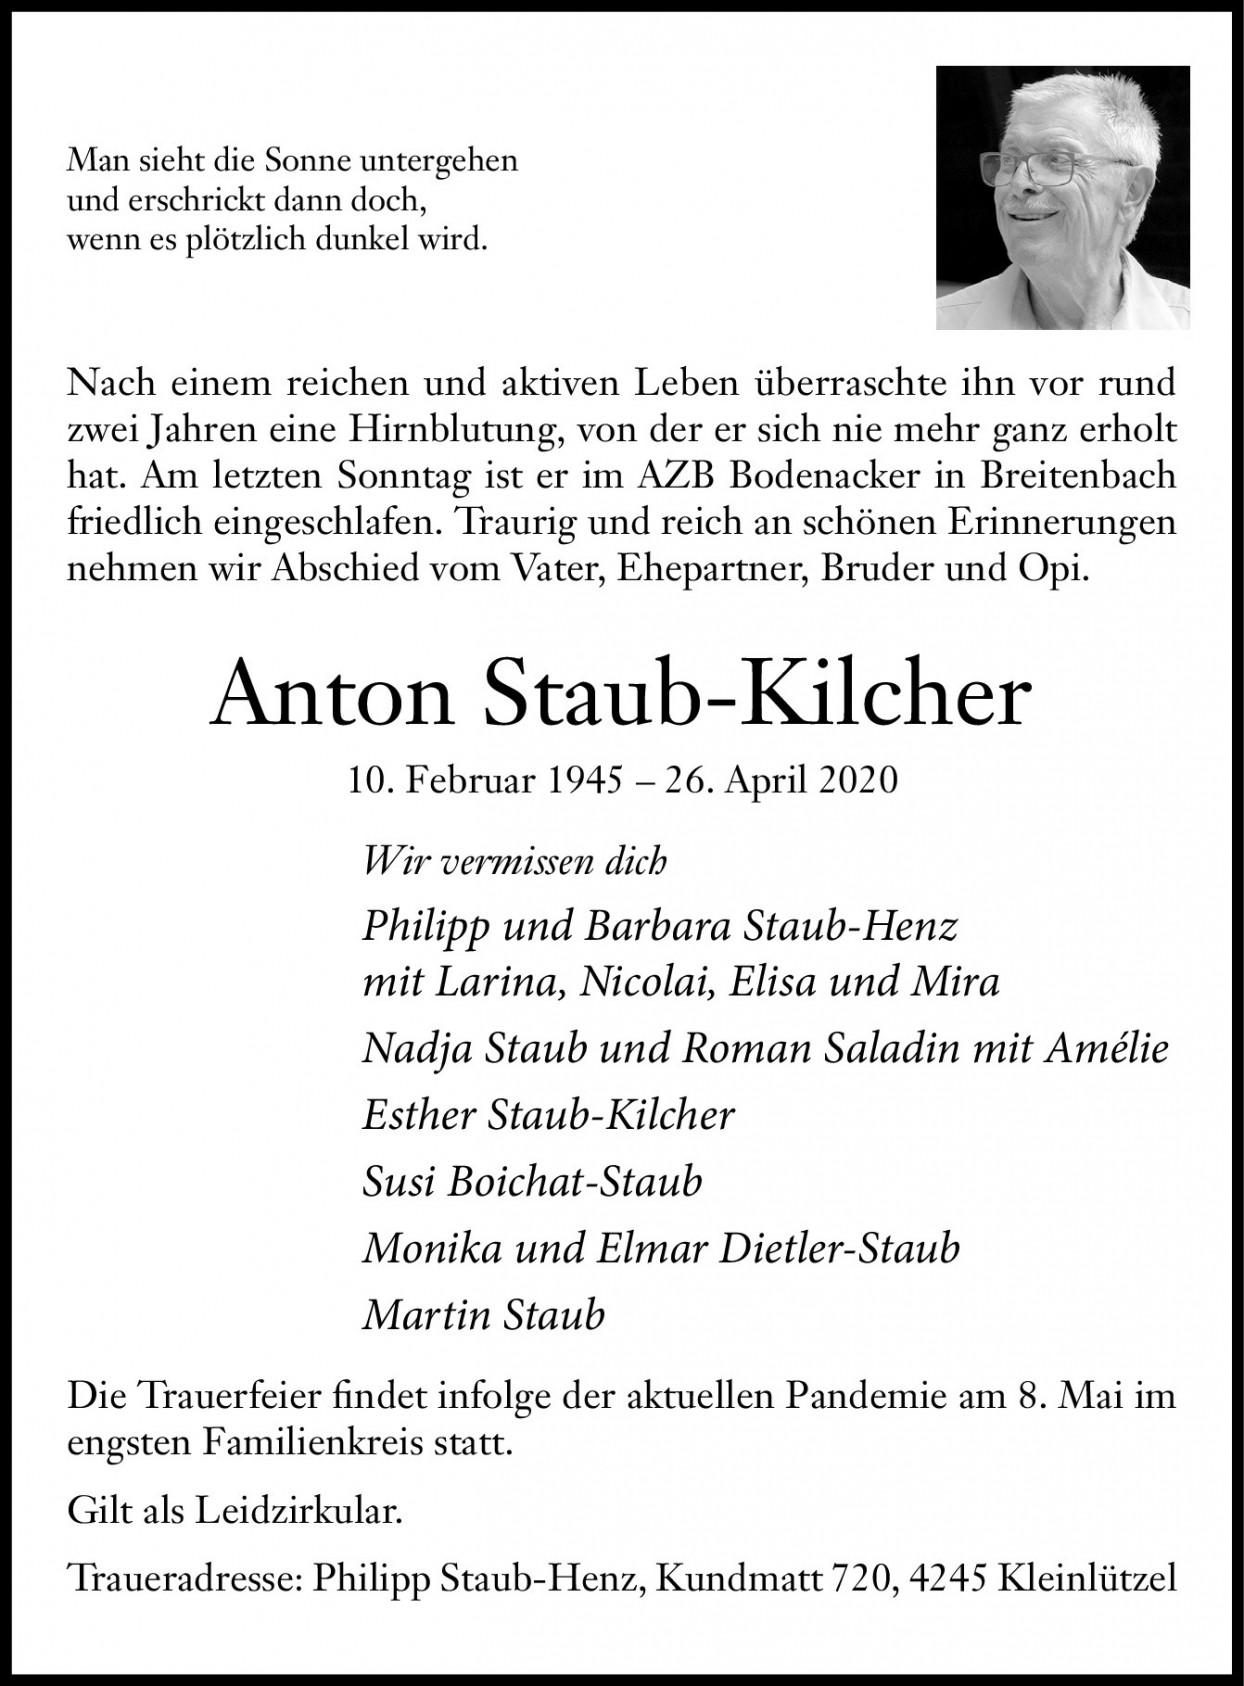 Anton Staub-Kilcher